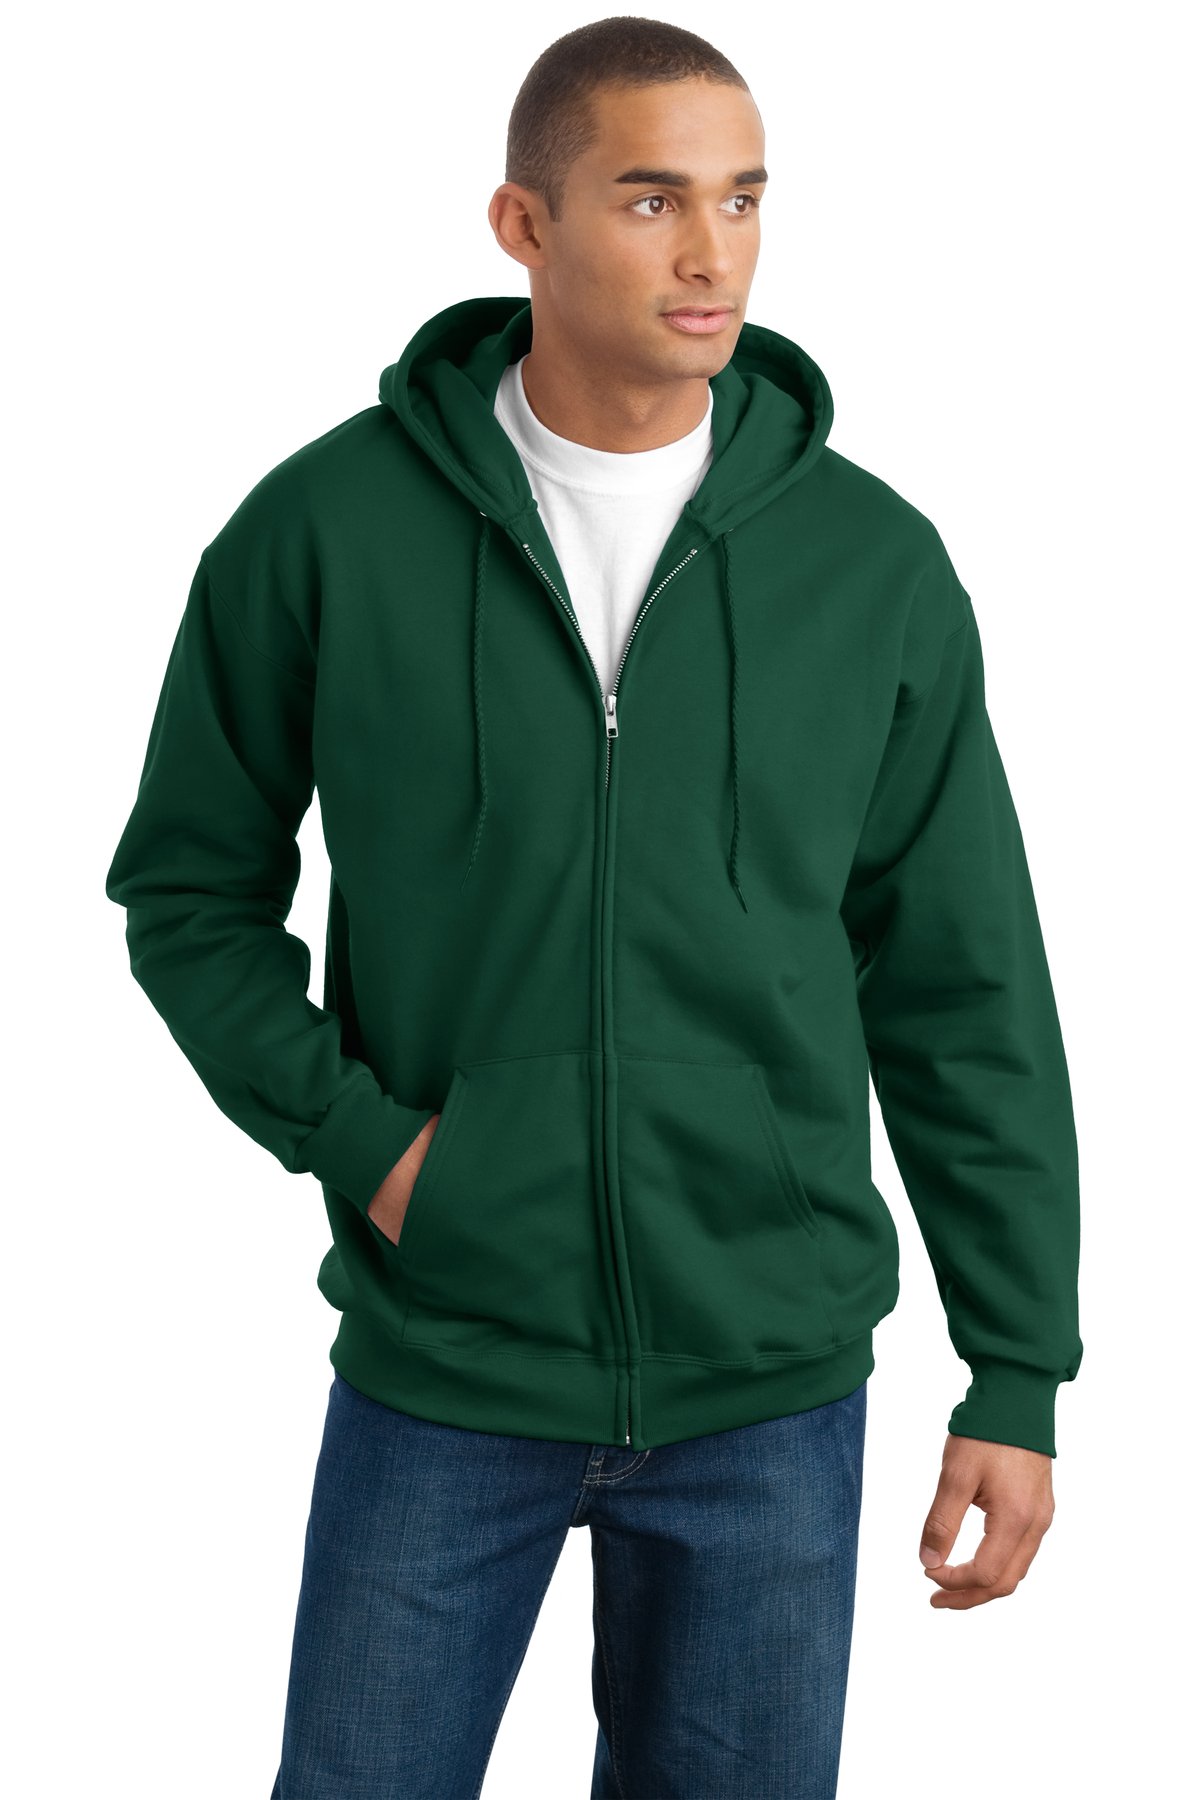 Sweatshirts-Fleece-Full-Zip-8